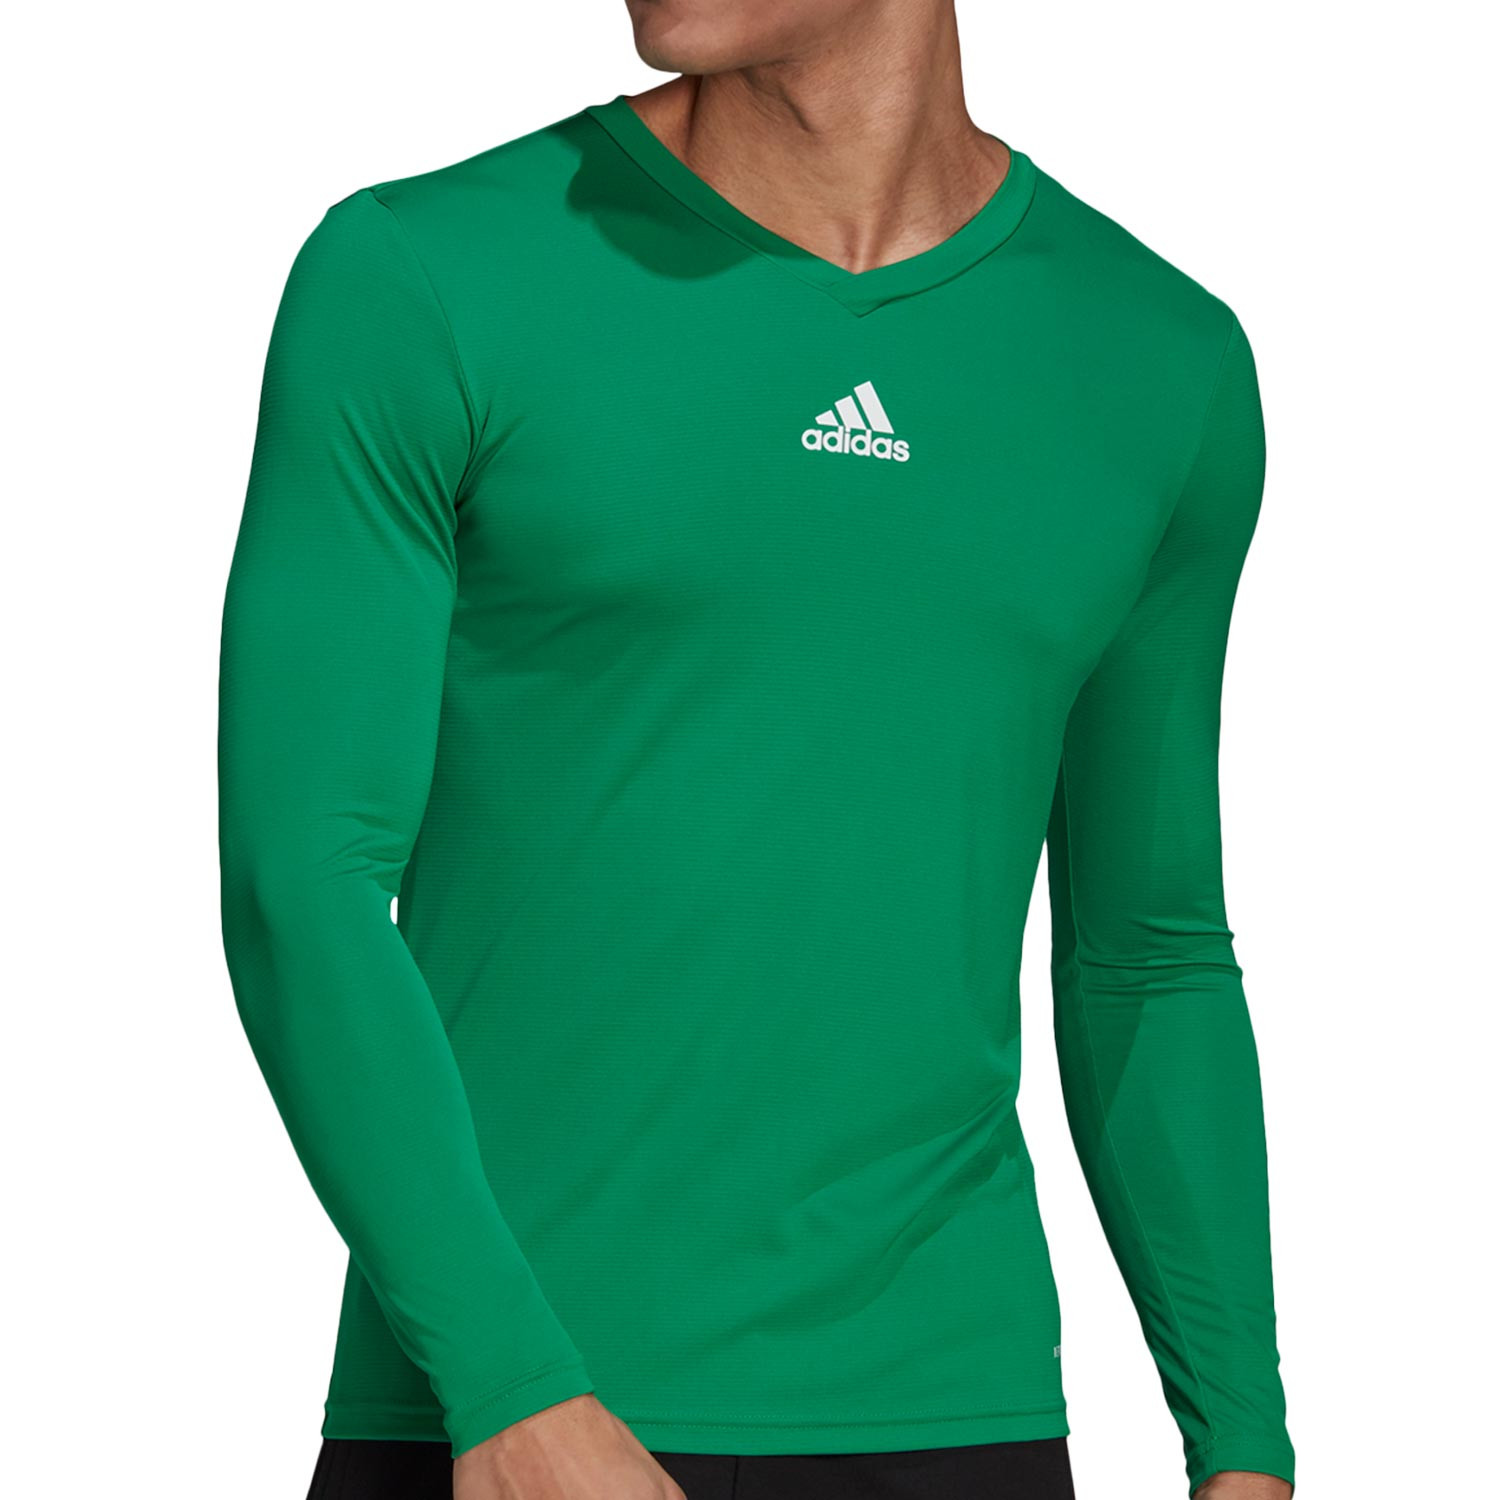 Camiseta térmica niño larga Nike verde